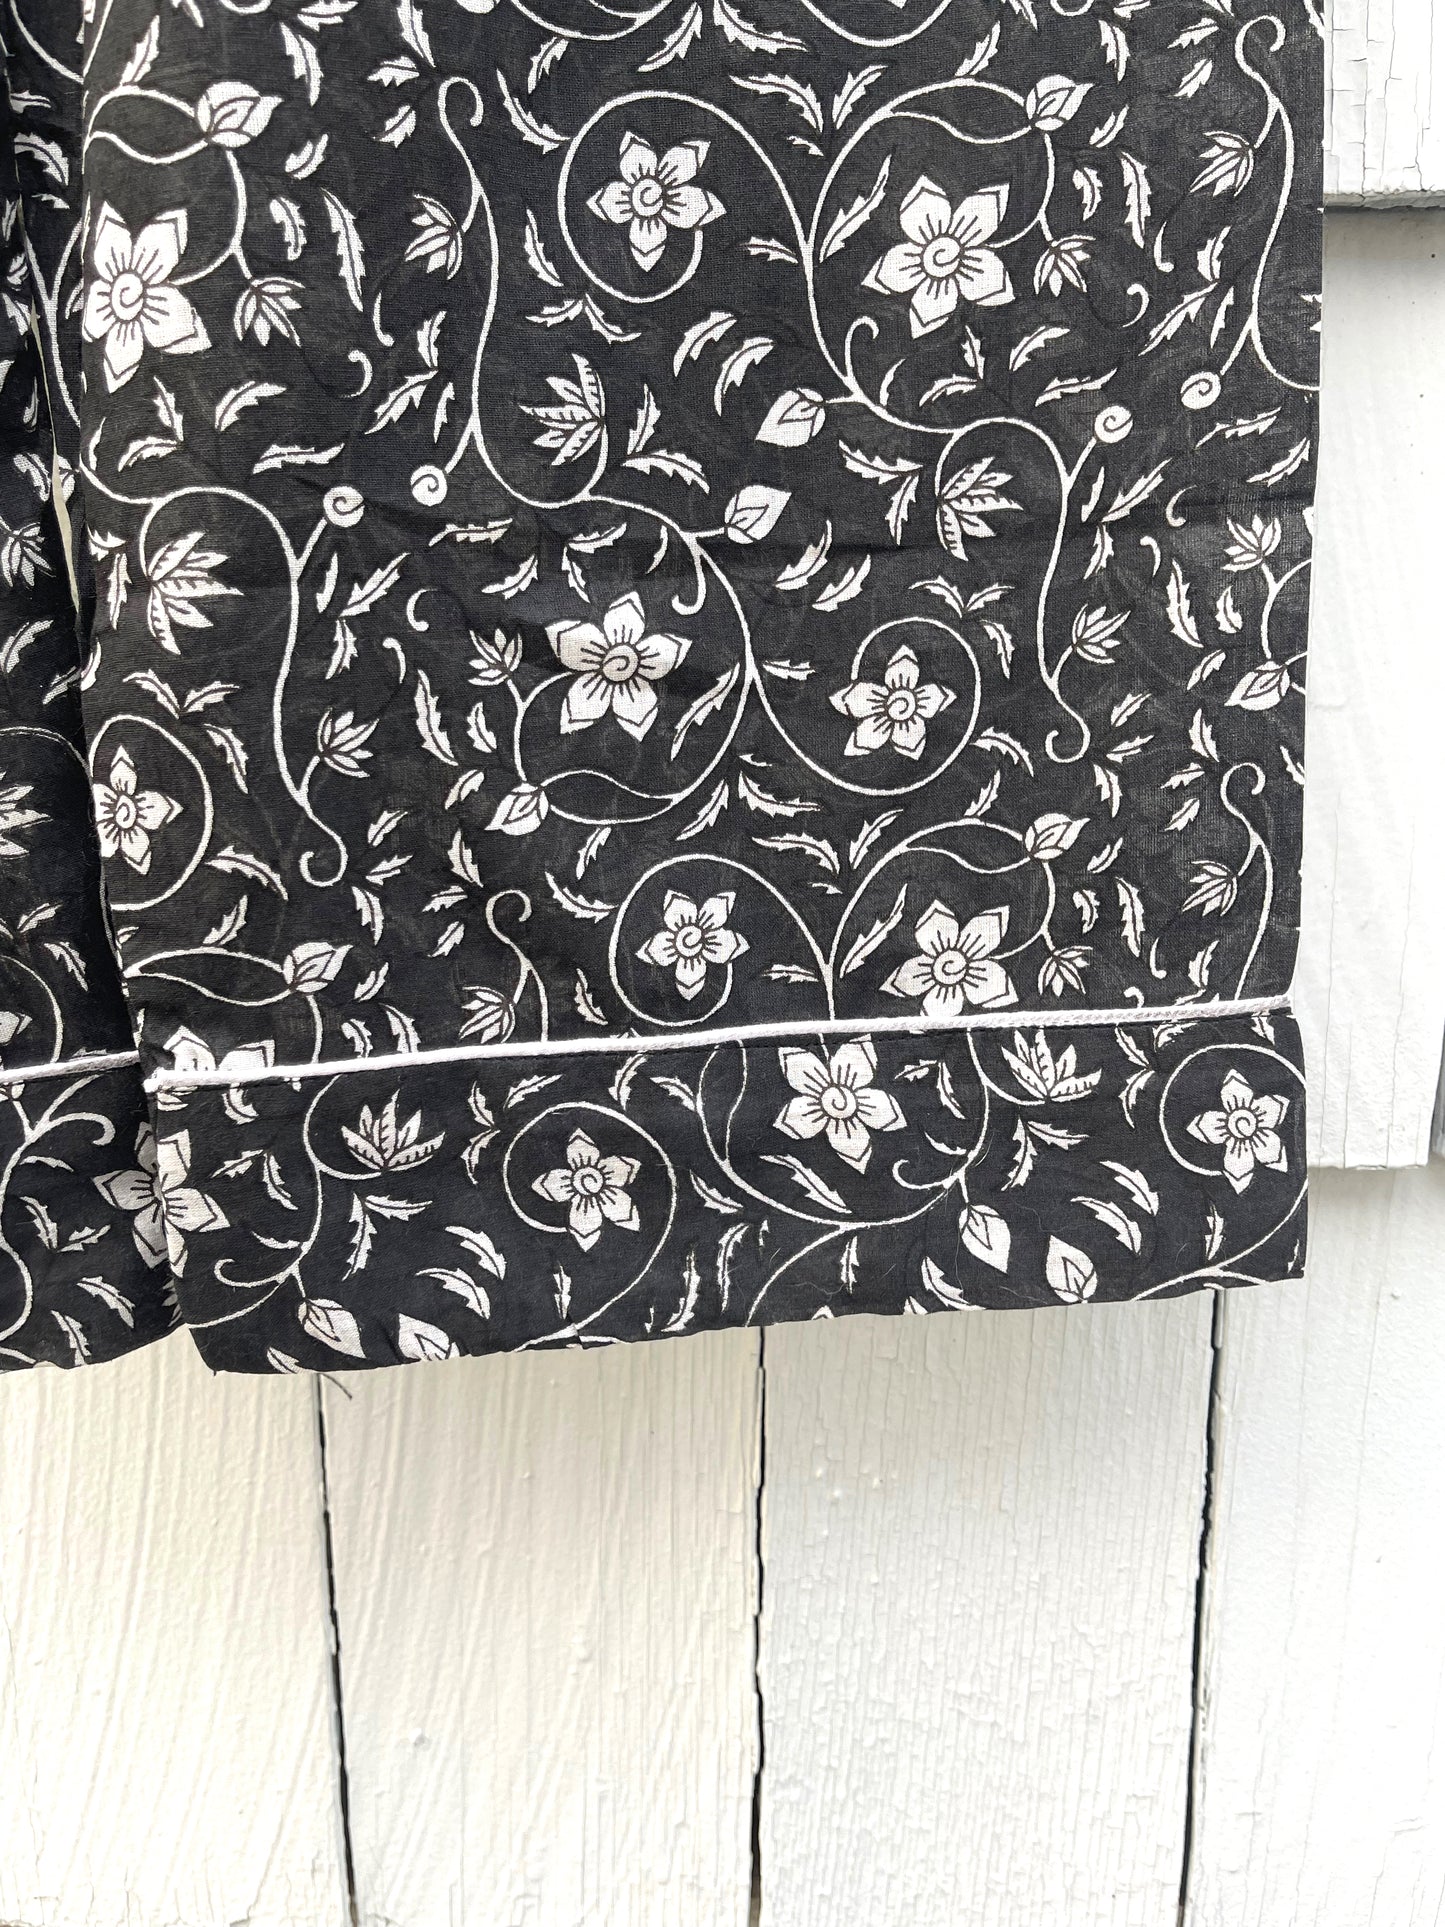 Chinoiserie Inspired Hand-block Print Pajamas with White Flowers on Black - DharBazaar